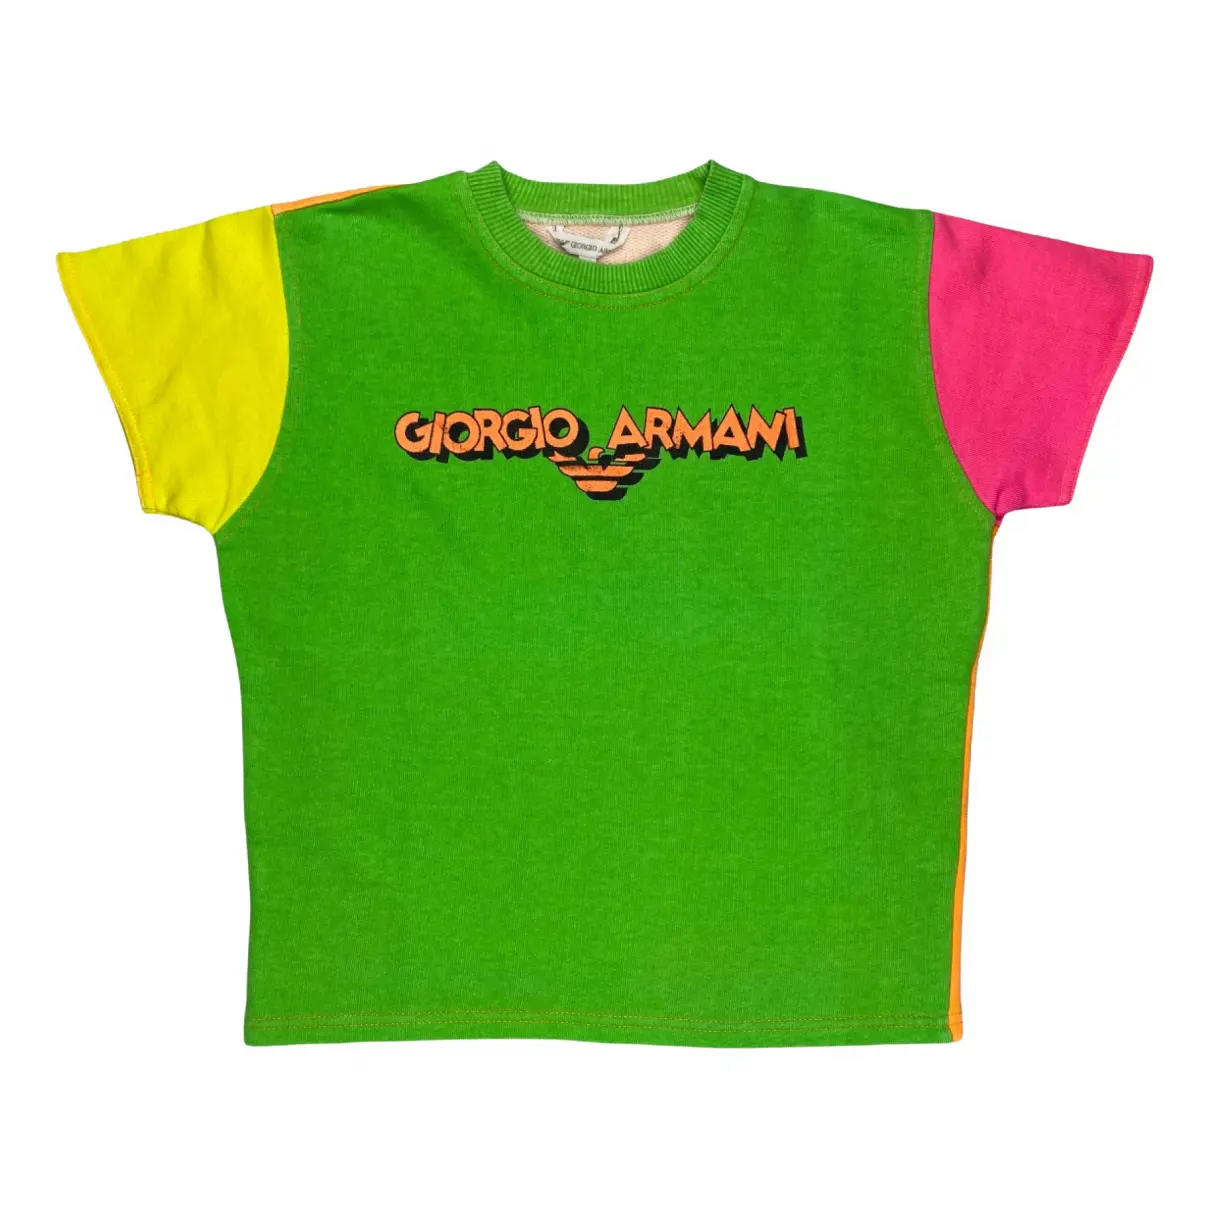 T-shirt Giorgio Armani - Vintage